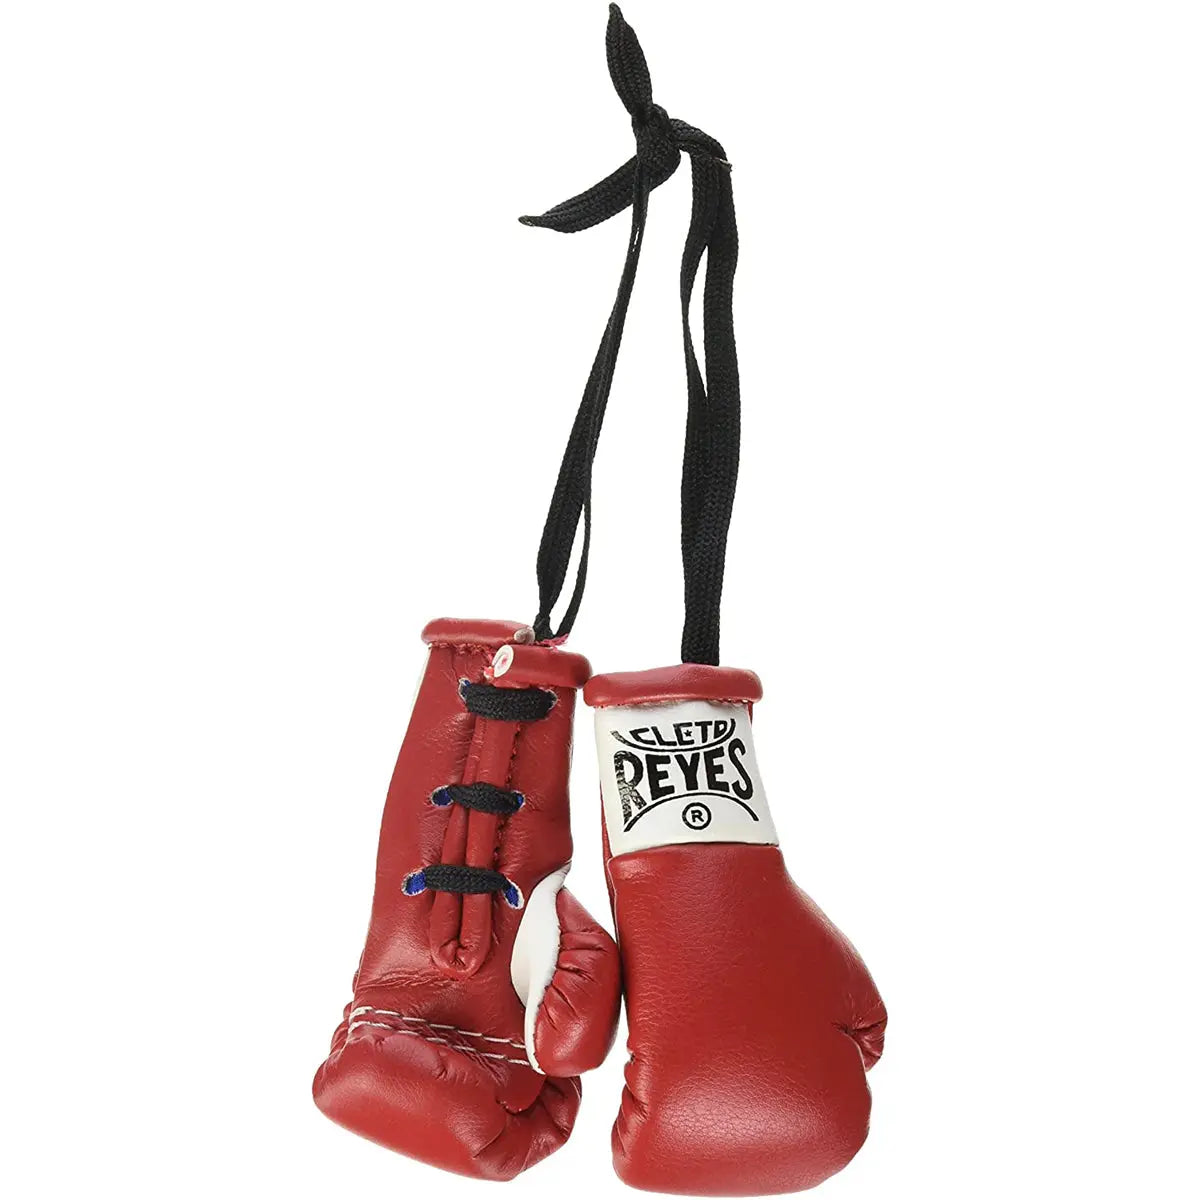 Cleto Reyes Miniature Pair of Boxing Gloves - Black Cleto Reyes